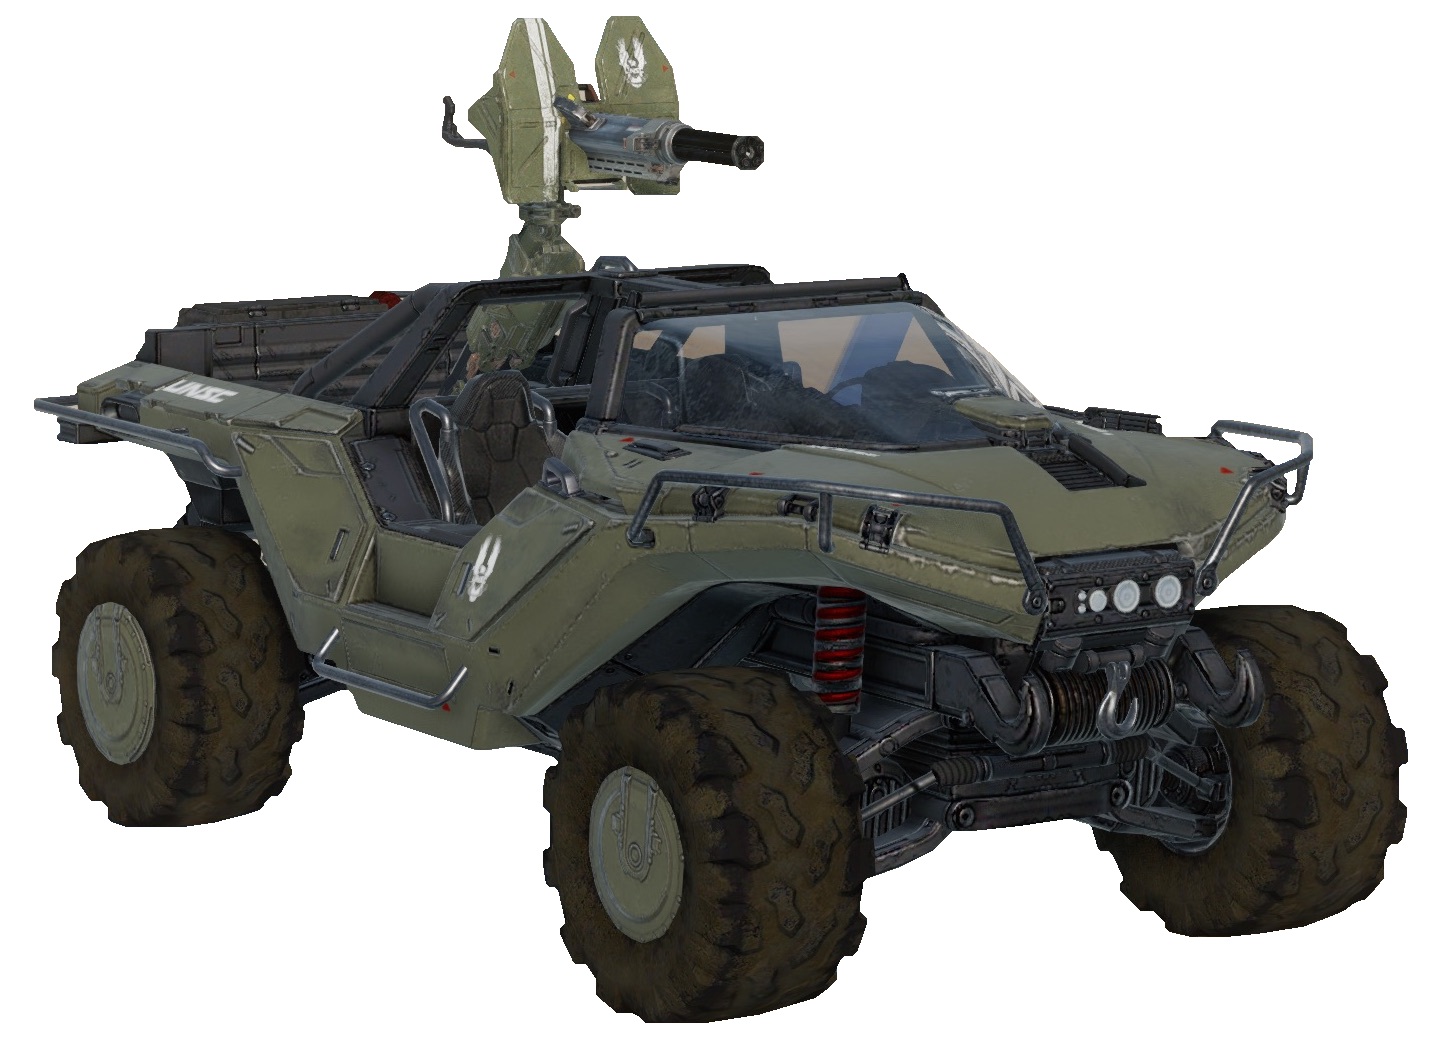 H5G-Warthog LRV (render).png